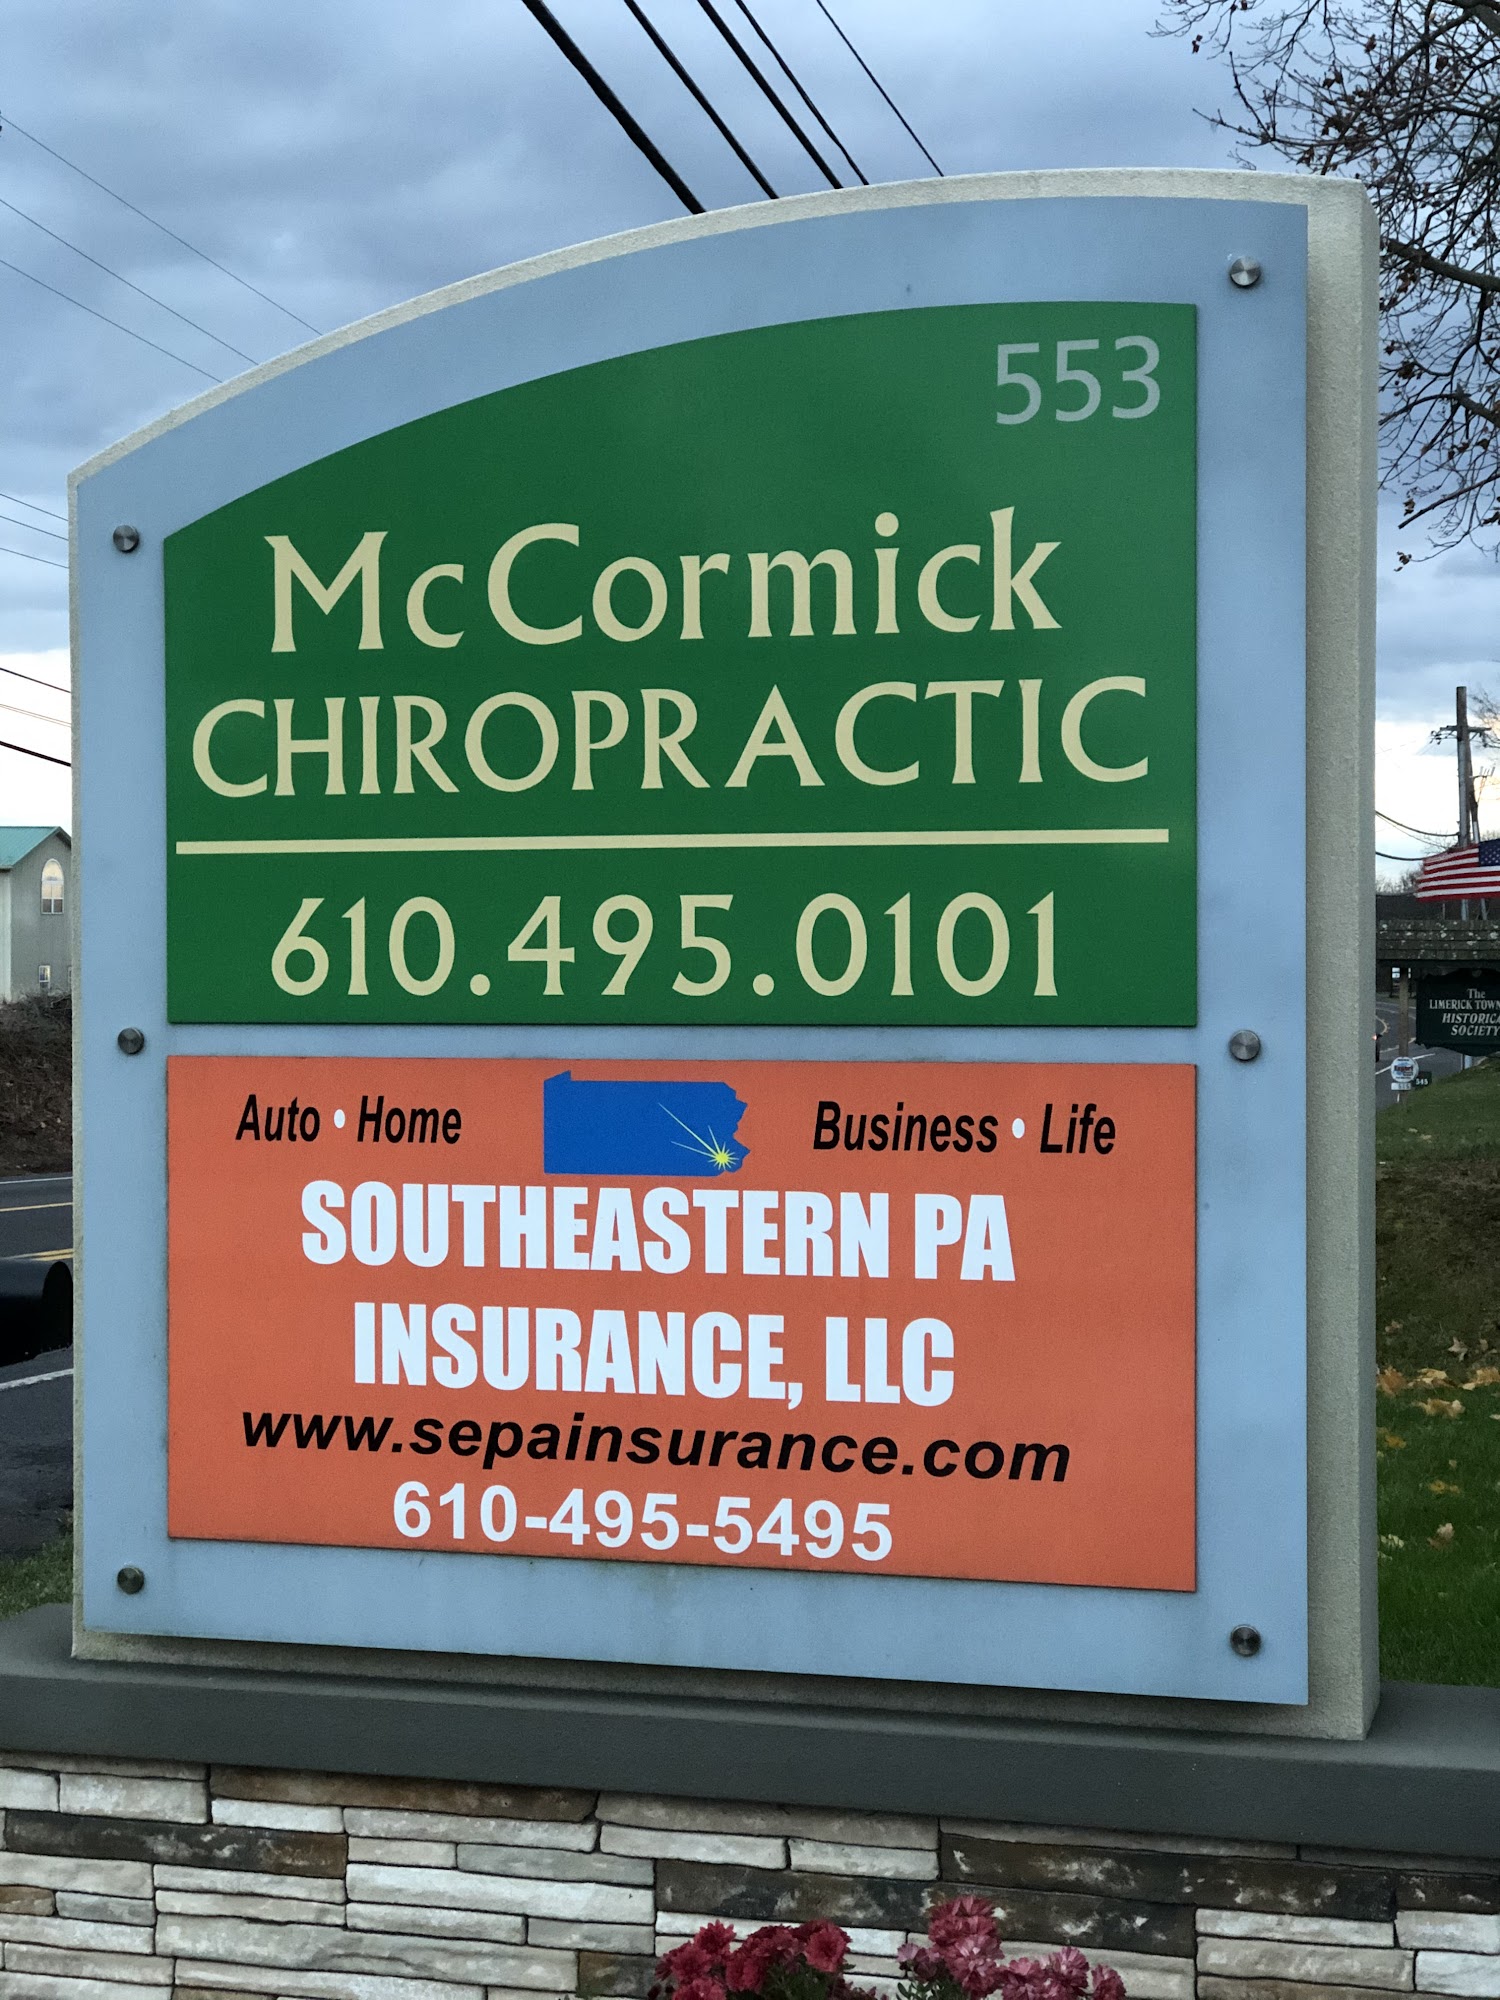 McCormick Chiropractic 553 W Ridge Pike, Linfield Pennsylvania 19468